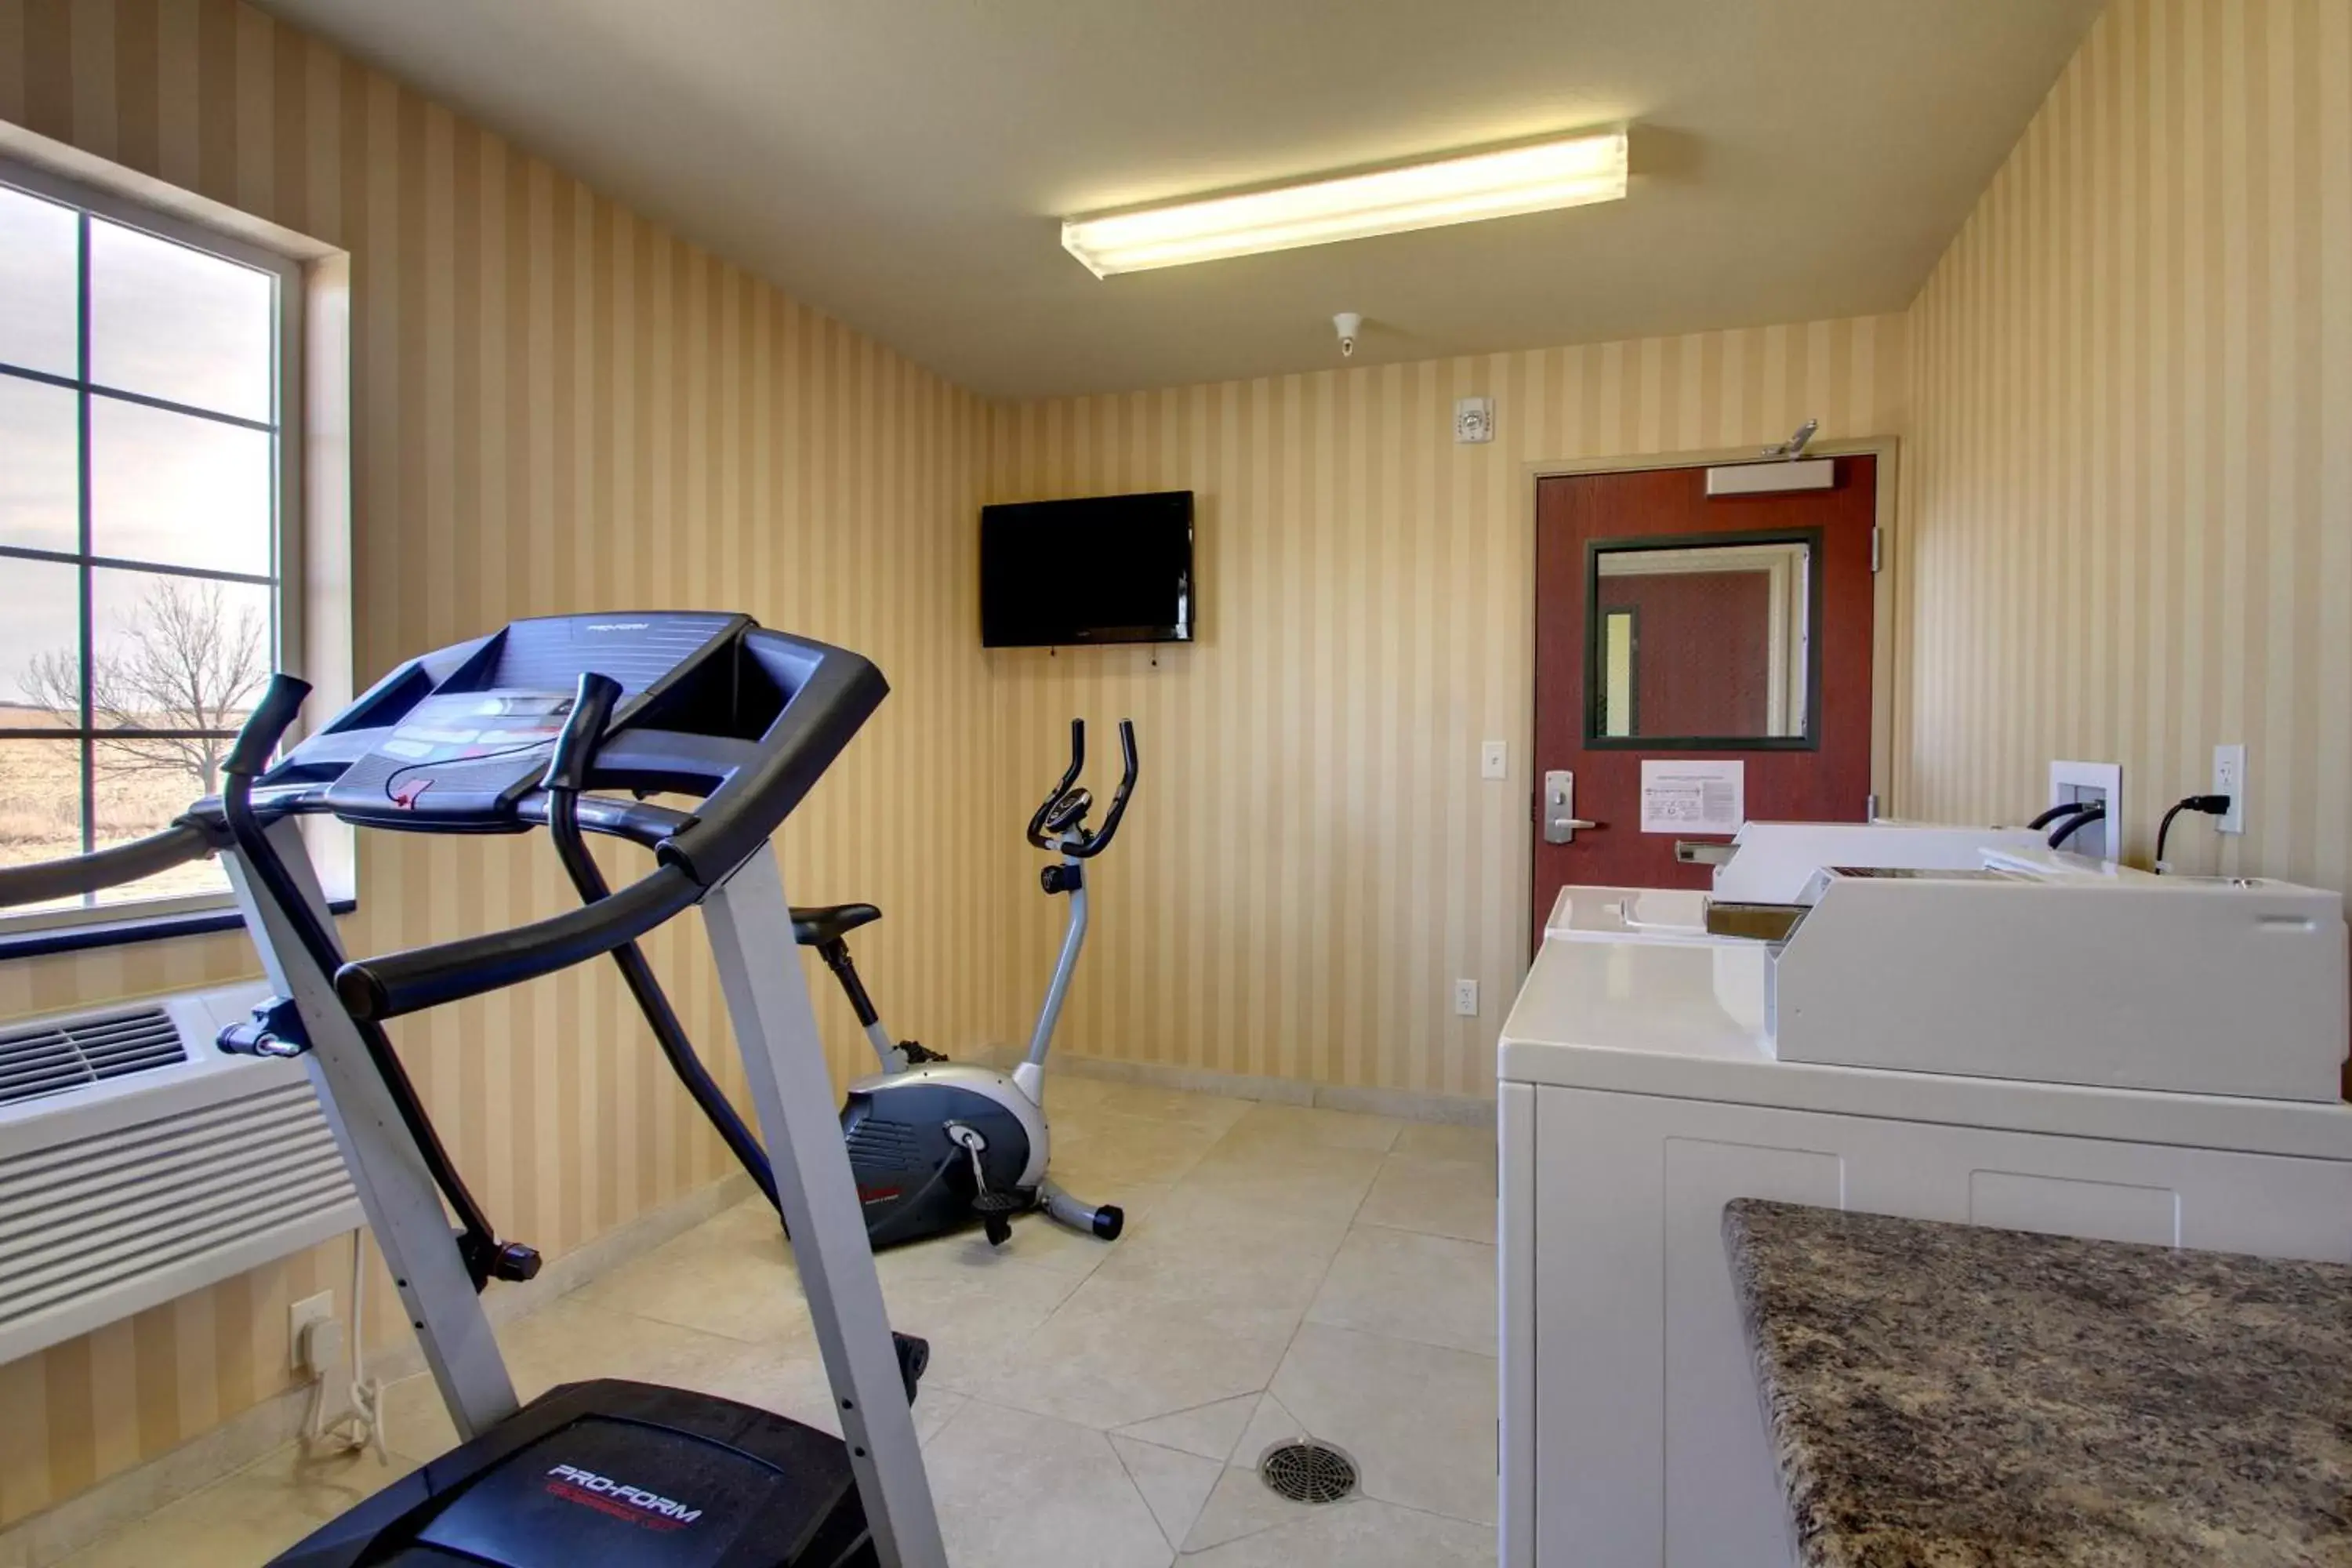 Fitness centre/facilities, Fitness Center/Facilities in Cobblestone Hotel - Wayne